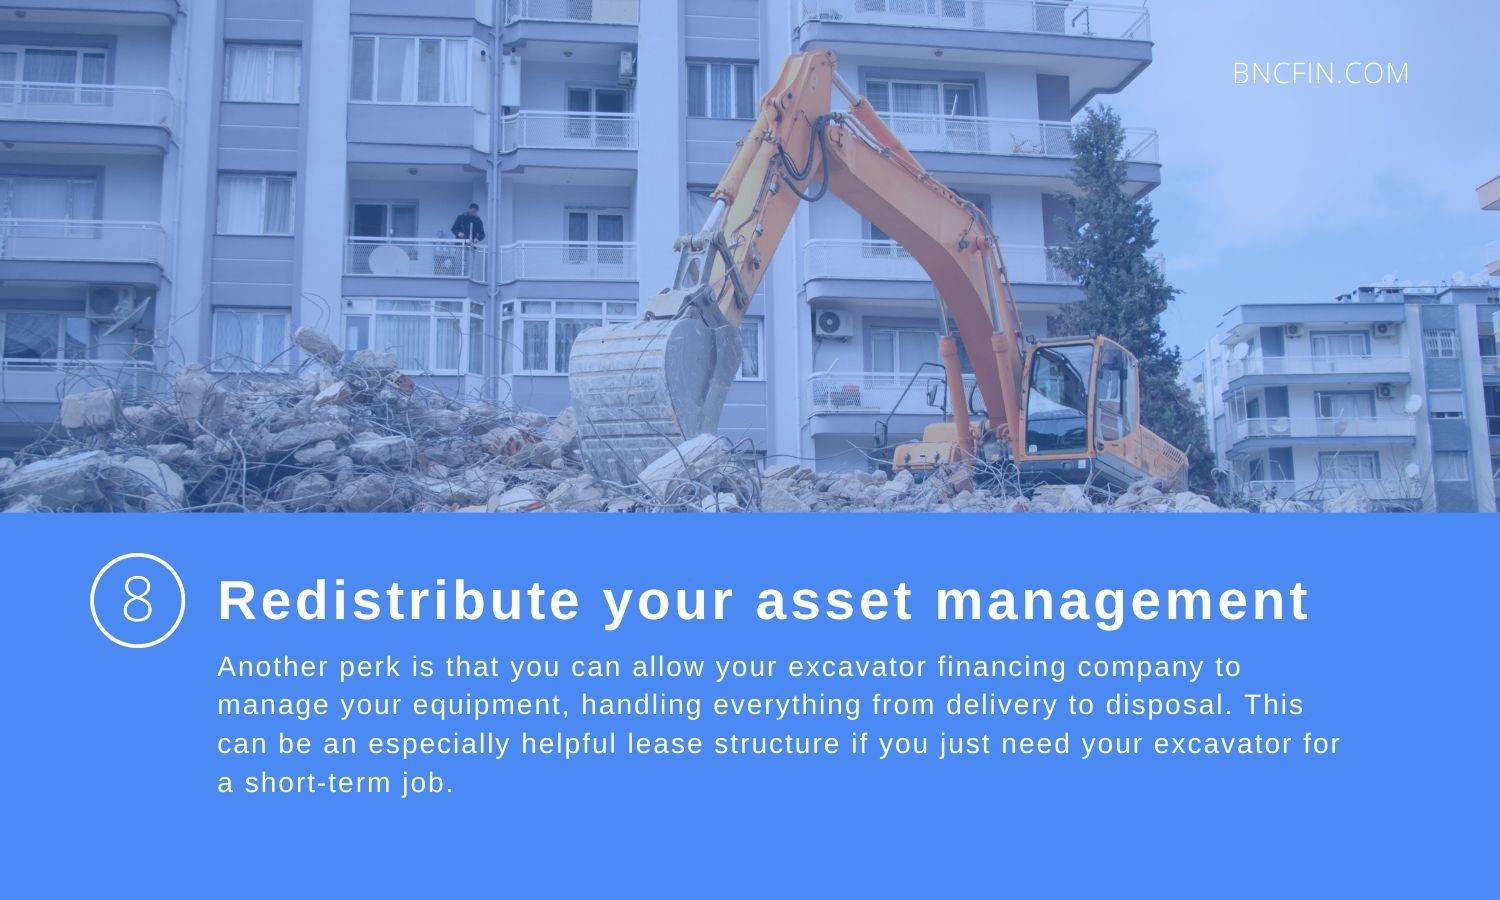 Redistribute your asset management.